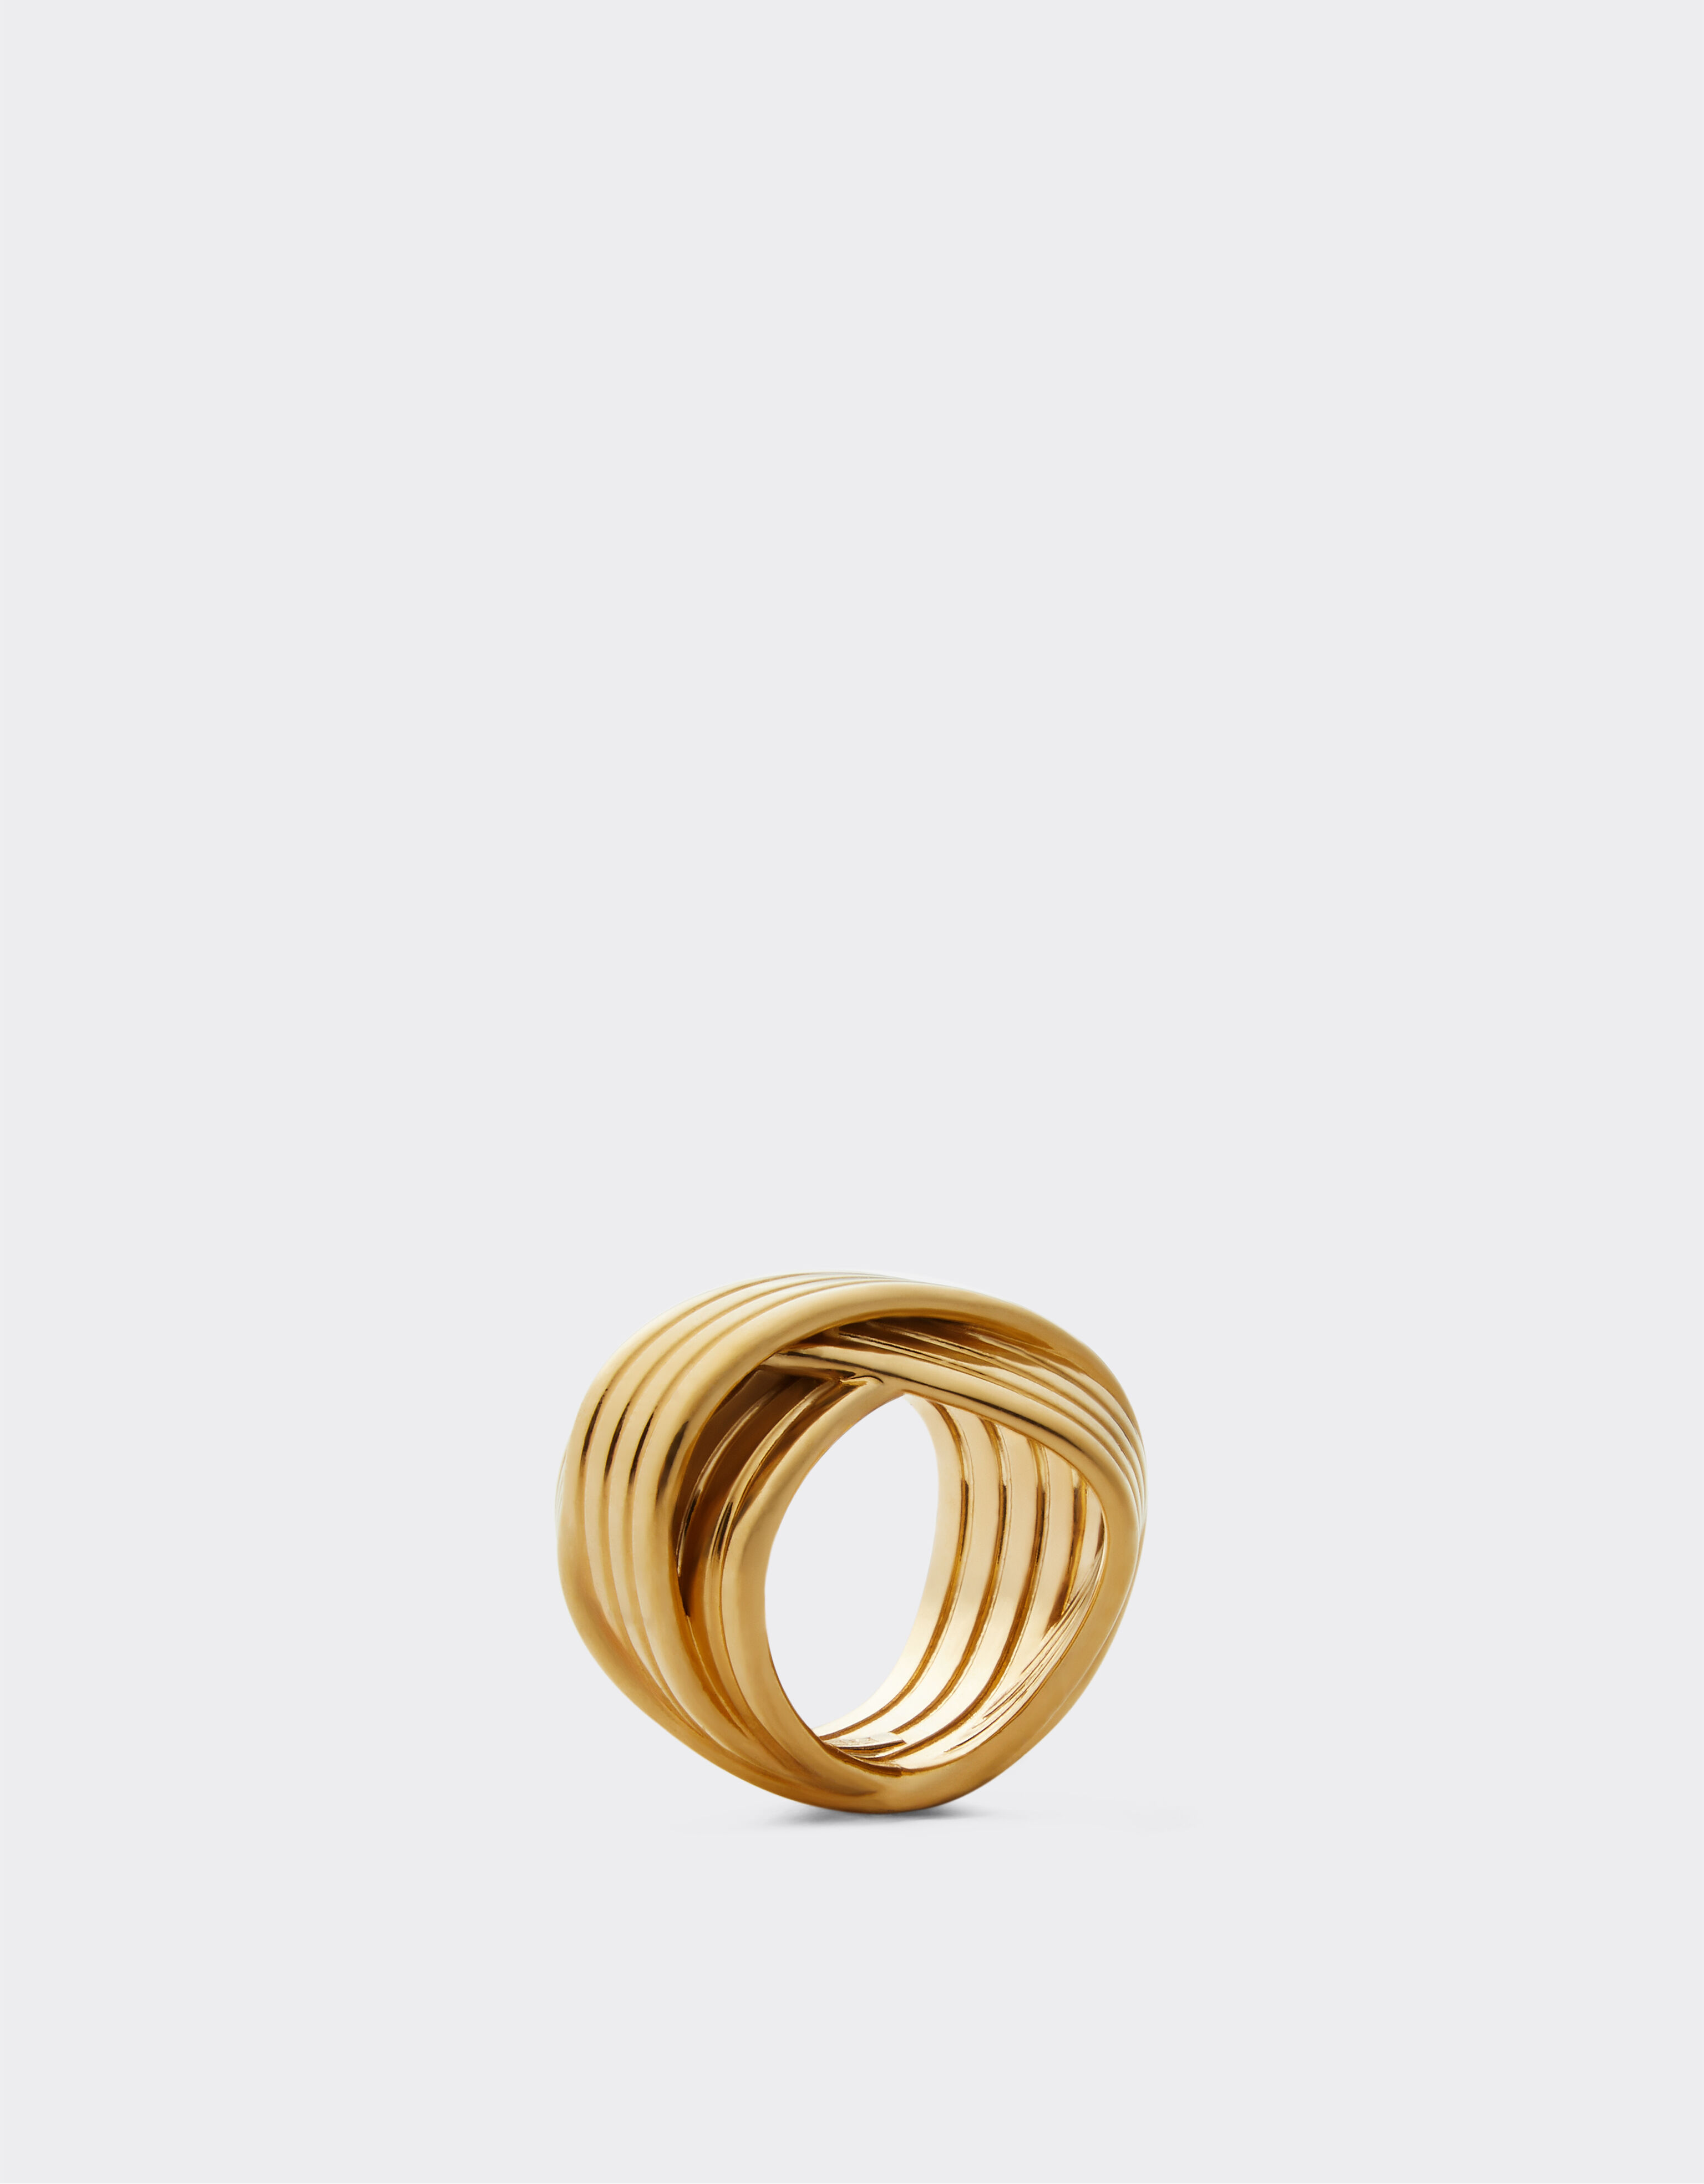 Ferrari Goldener Ring mit Rennstreckenmotiv Gold 21156f